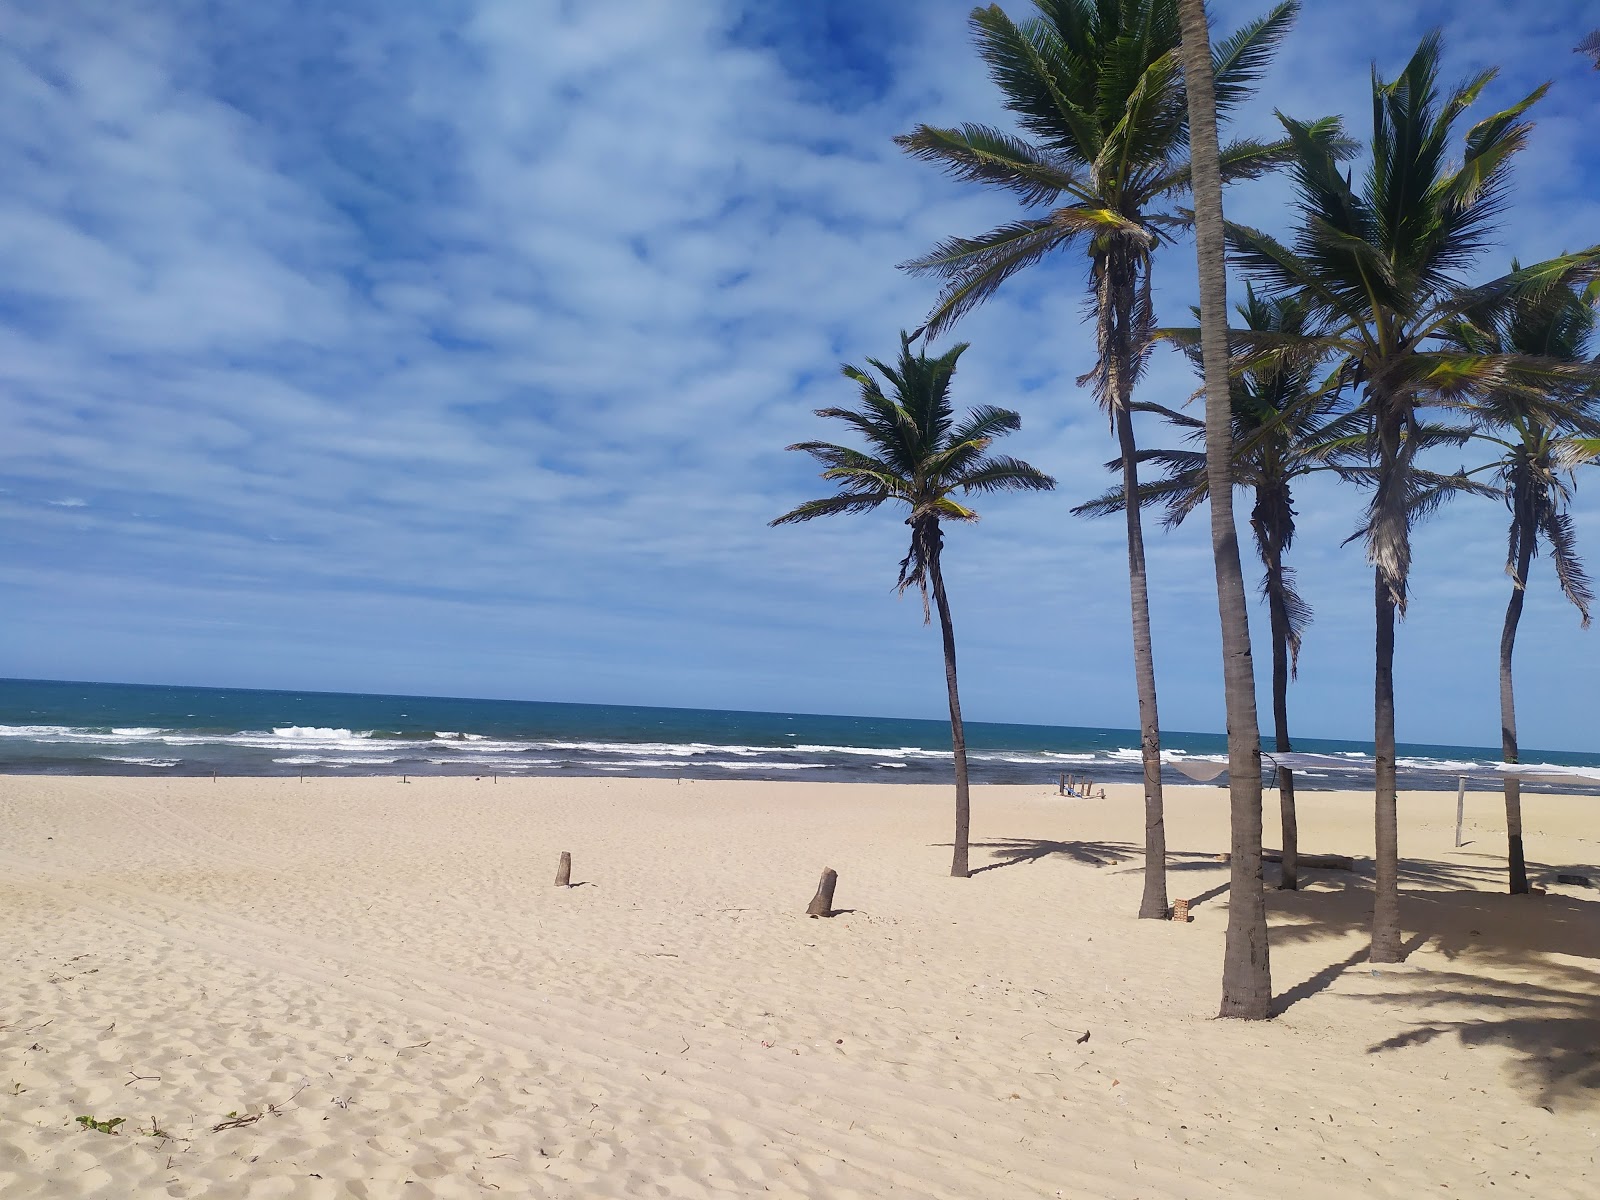 Foto de Praia do Futuro - lugar popular entre os apreciadores de relaxamento